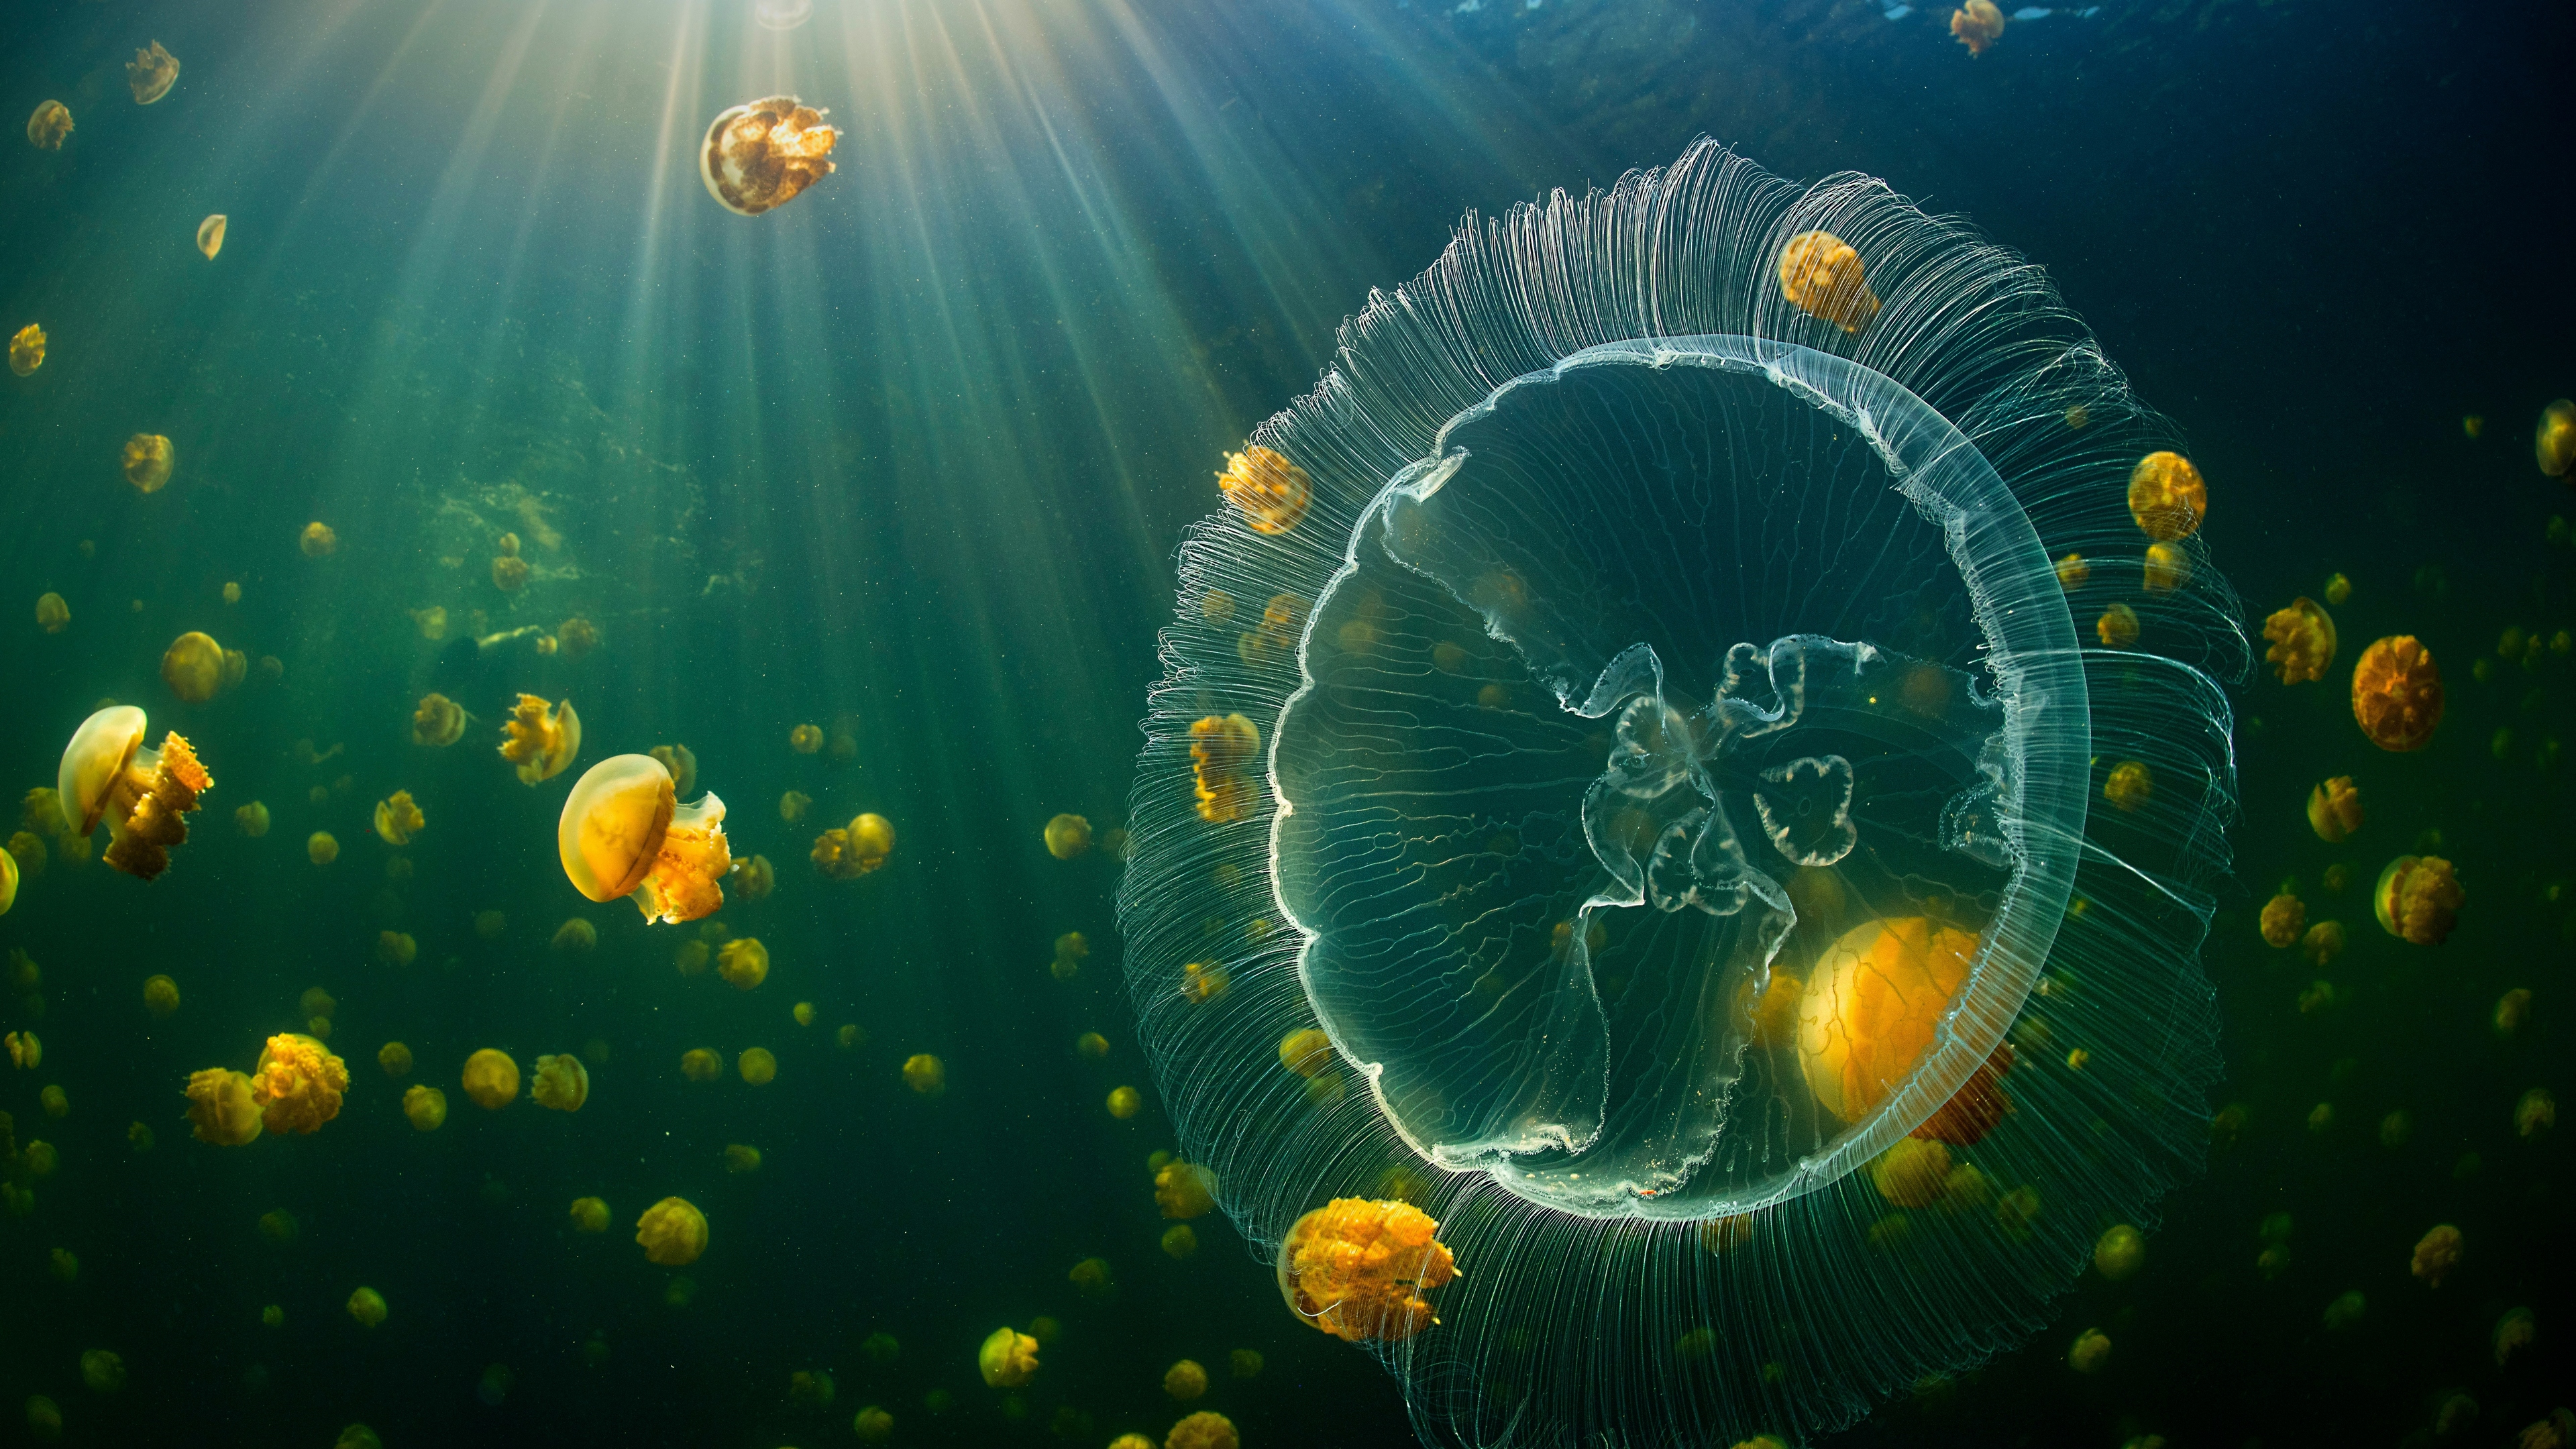 Free photo Underwater world with jellyfish in Indonesia